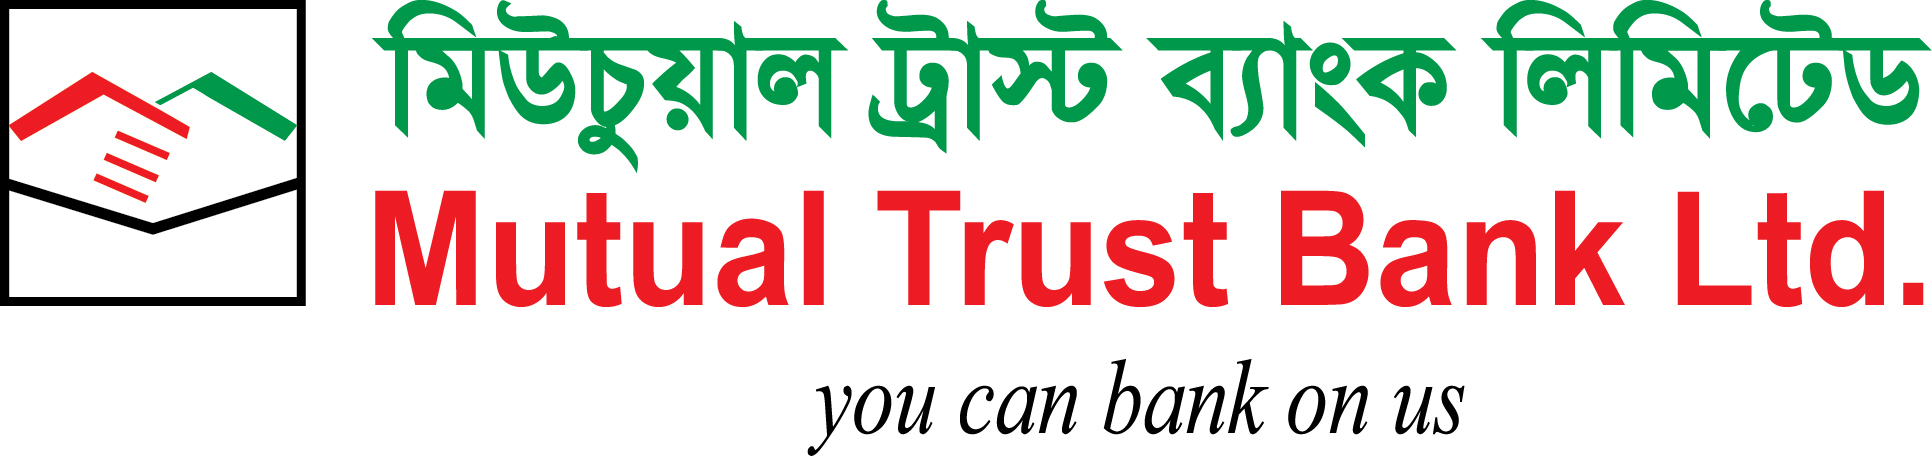 Mutual Trust Bank Ltd